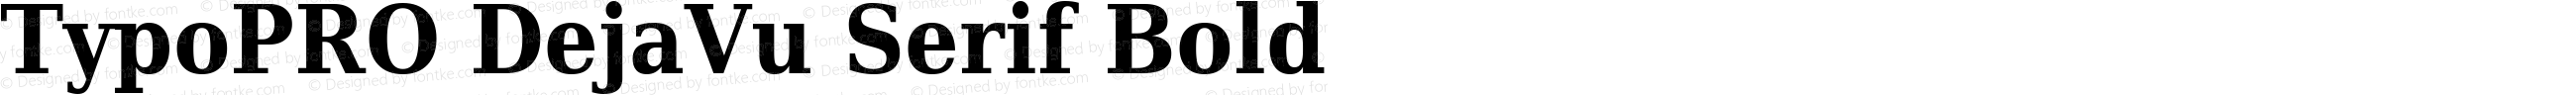 TypoPRO DejaVu Serif Condensed Bold